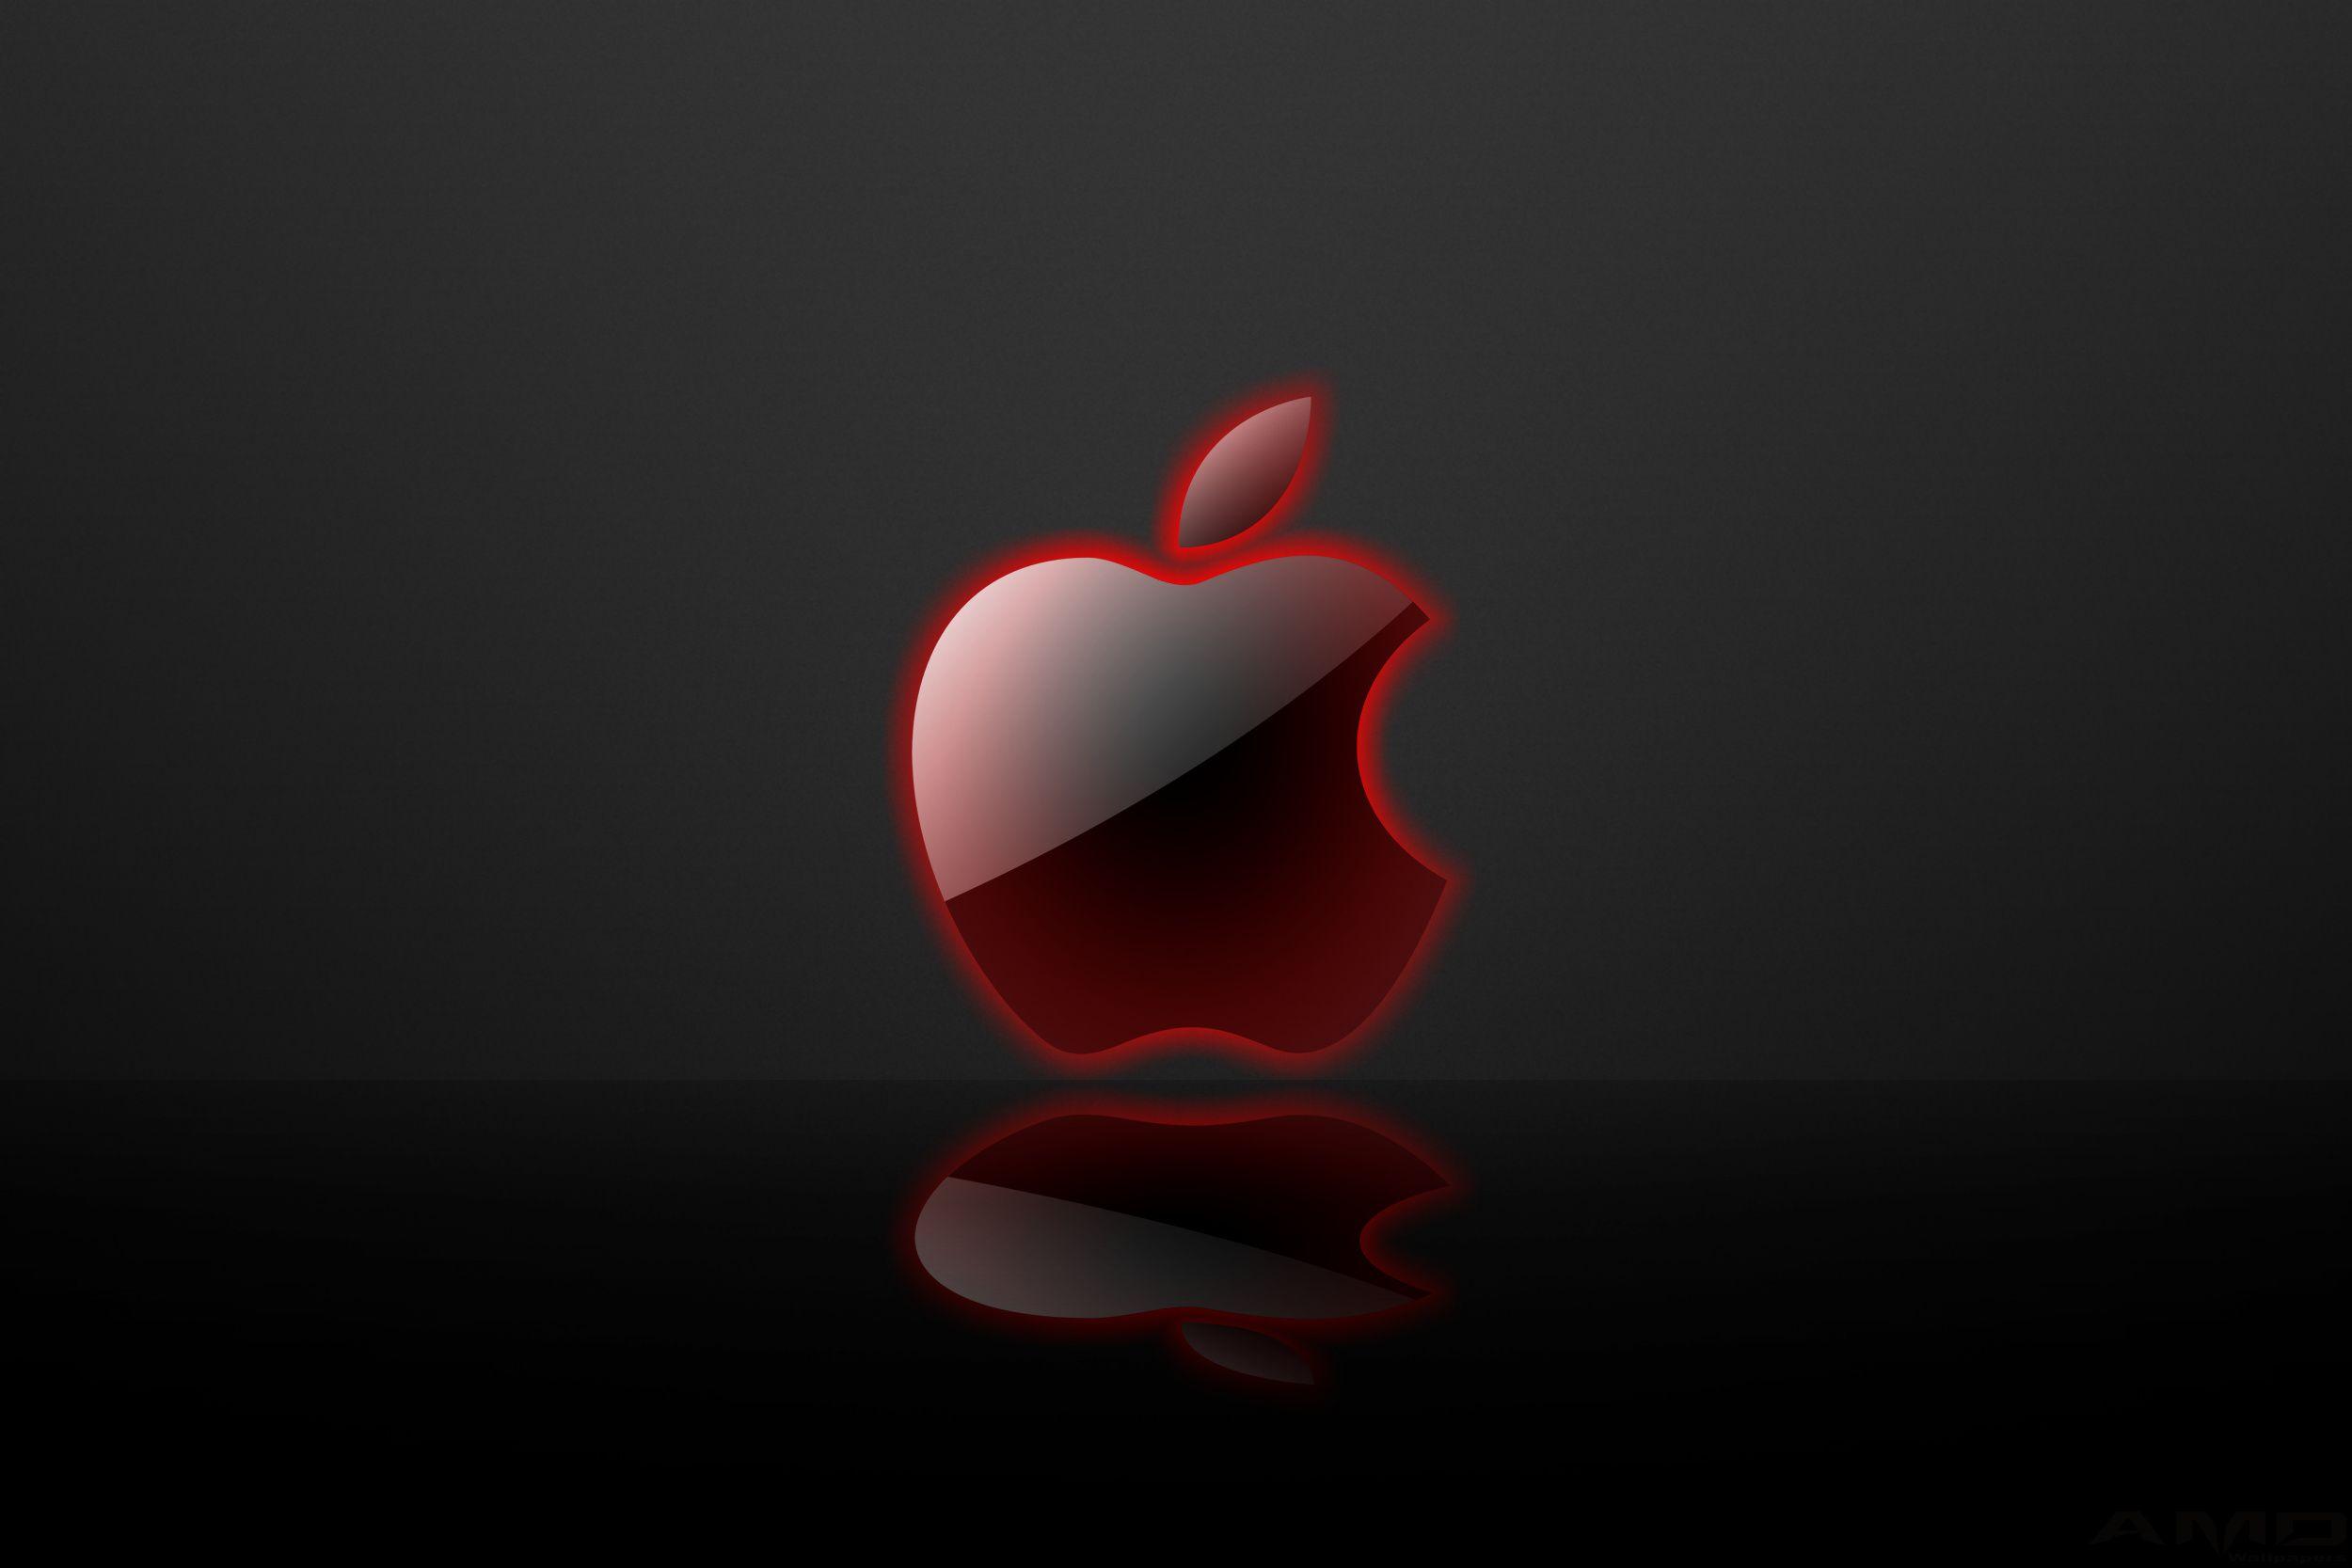 Black and Red Apple Logo - Red Apple Logo Wallpaper - WallpaperSafari